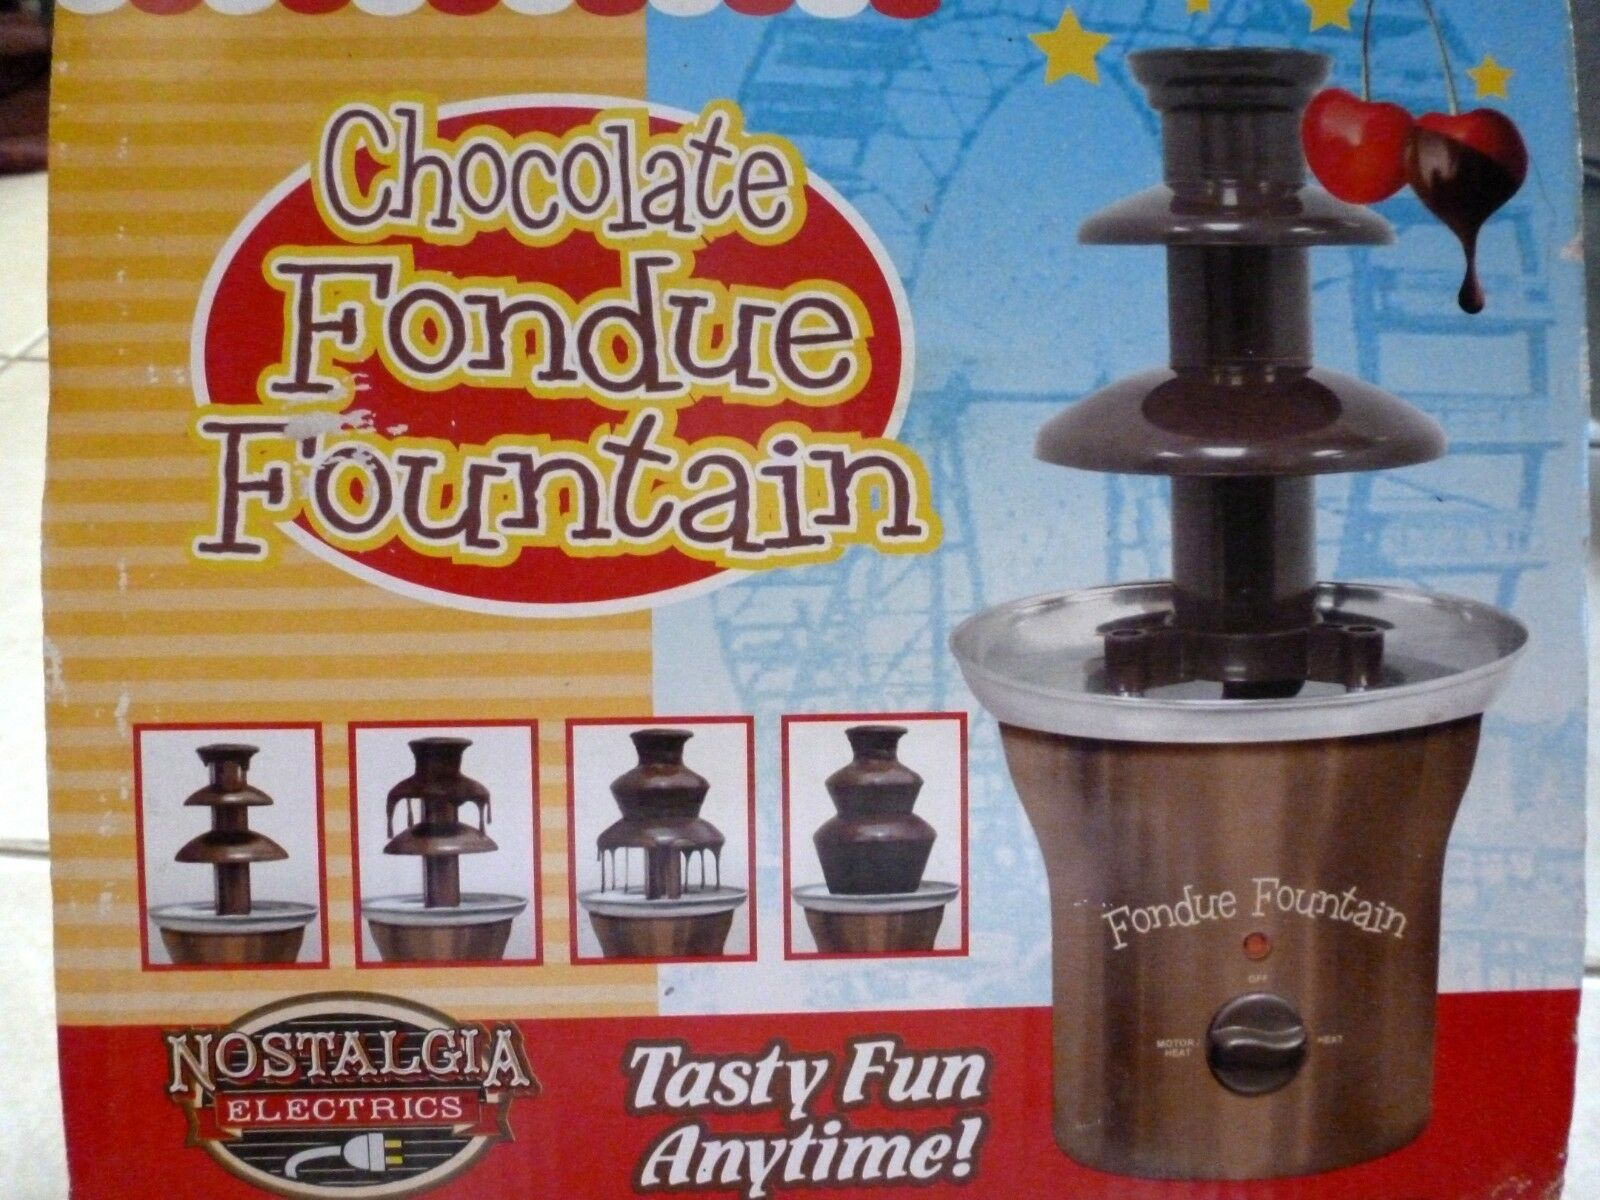 Nostalgia CFF-600 Stainless-Steel 2-Tier Chocolate Fondue Fountain 